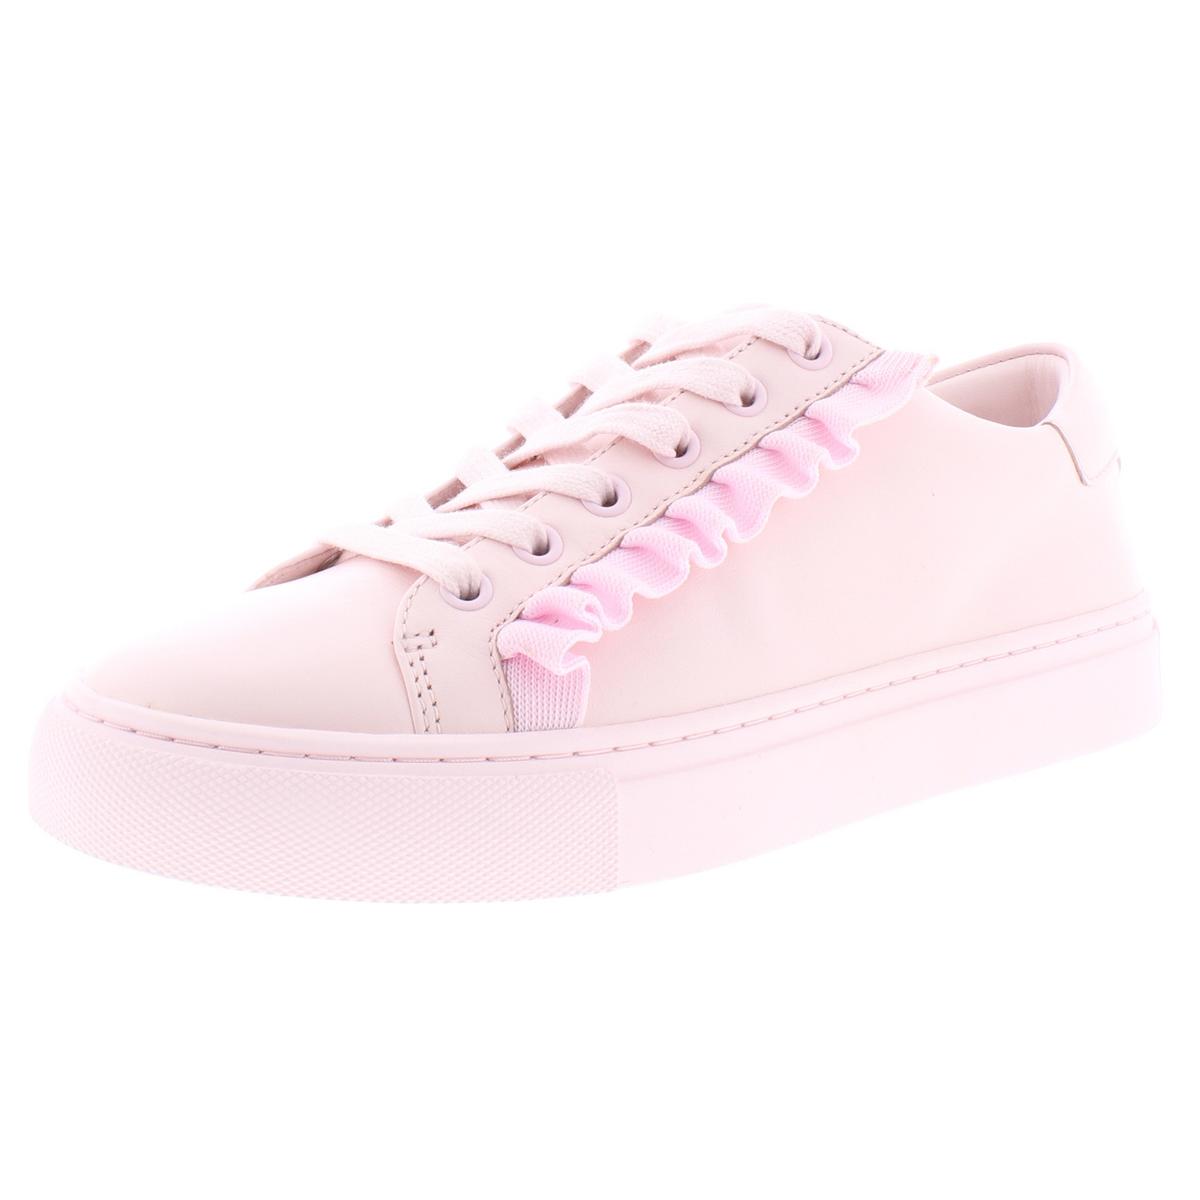 Tory Sport Womens Ruffle Pink Fashion Sneakers Shoes 7.5 ...